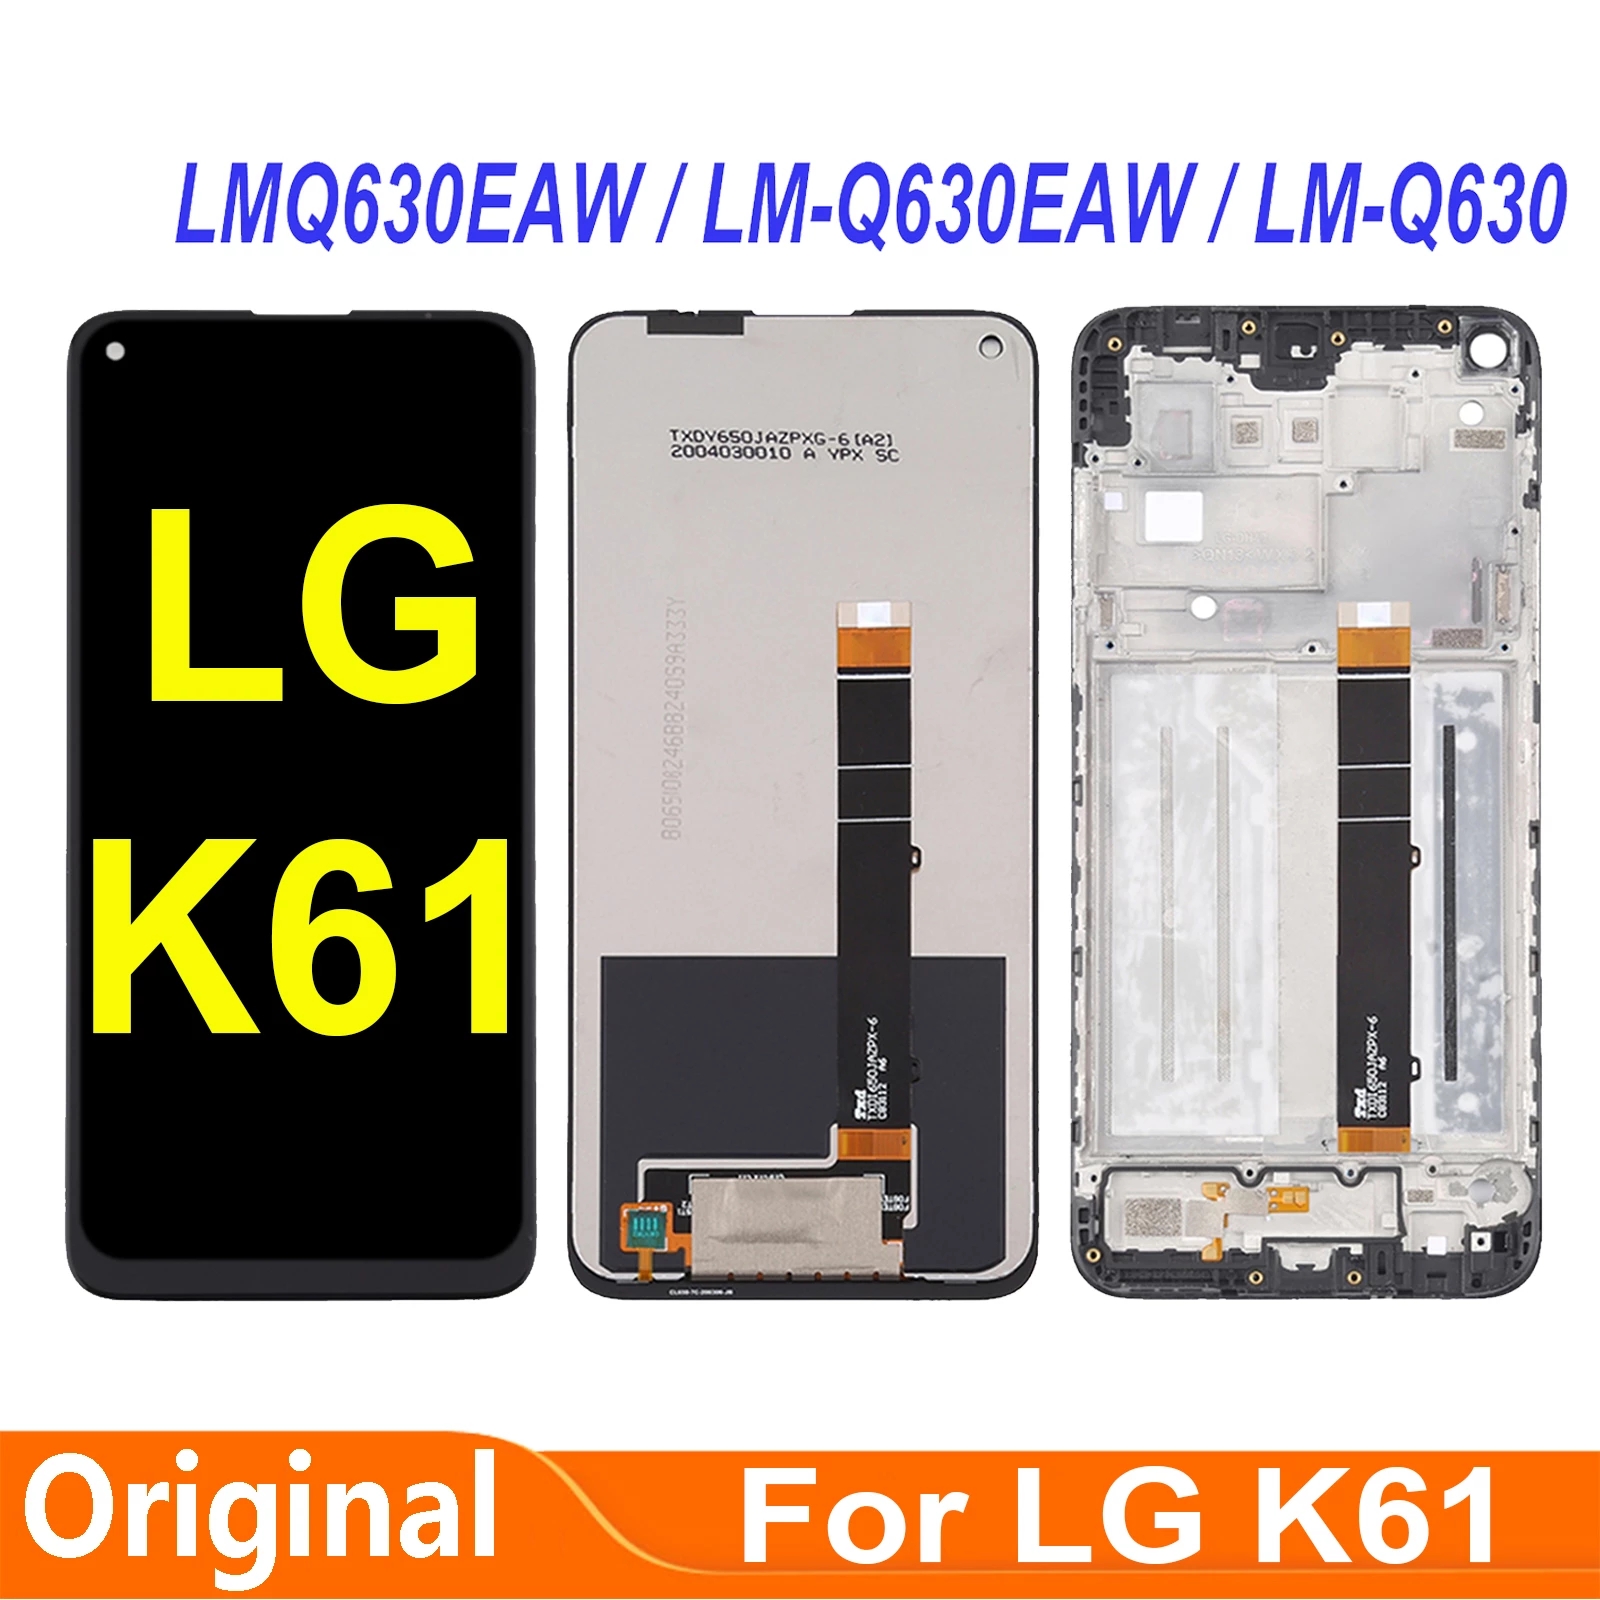 lg k61 LCD display